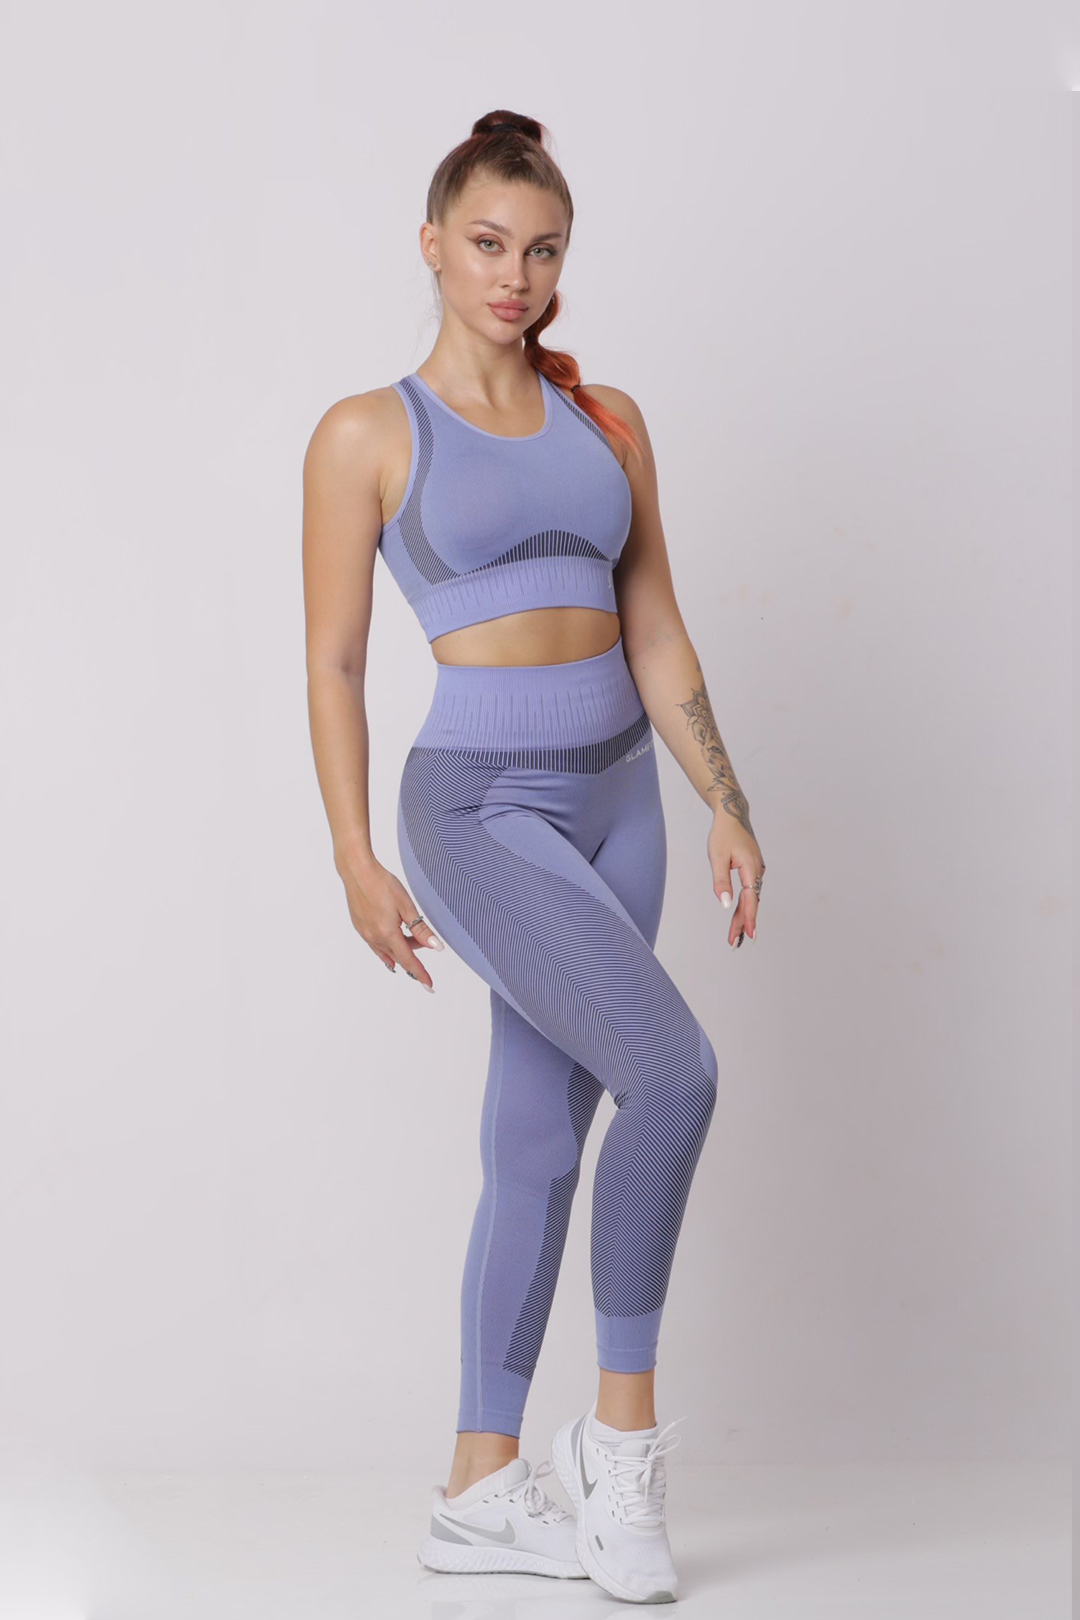 Samless Women 3pcs Yoga Sets Fitness Sport Suit Long Sleeve Zipper with  Sport Bra & Leggings Pants LightBlue